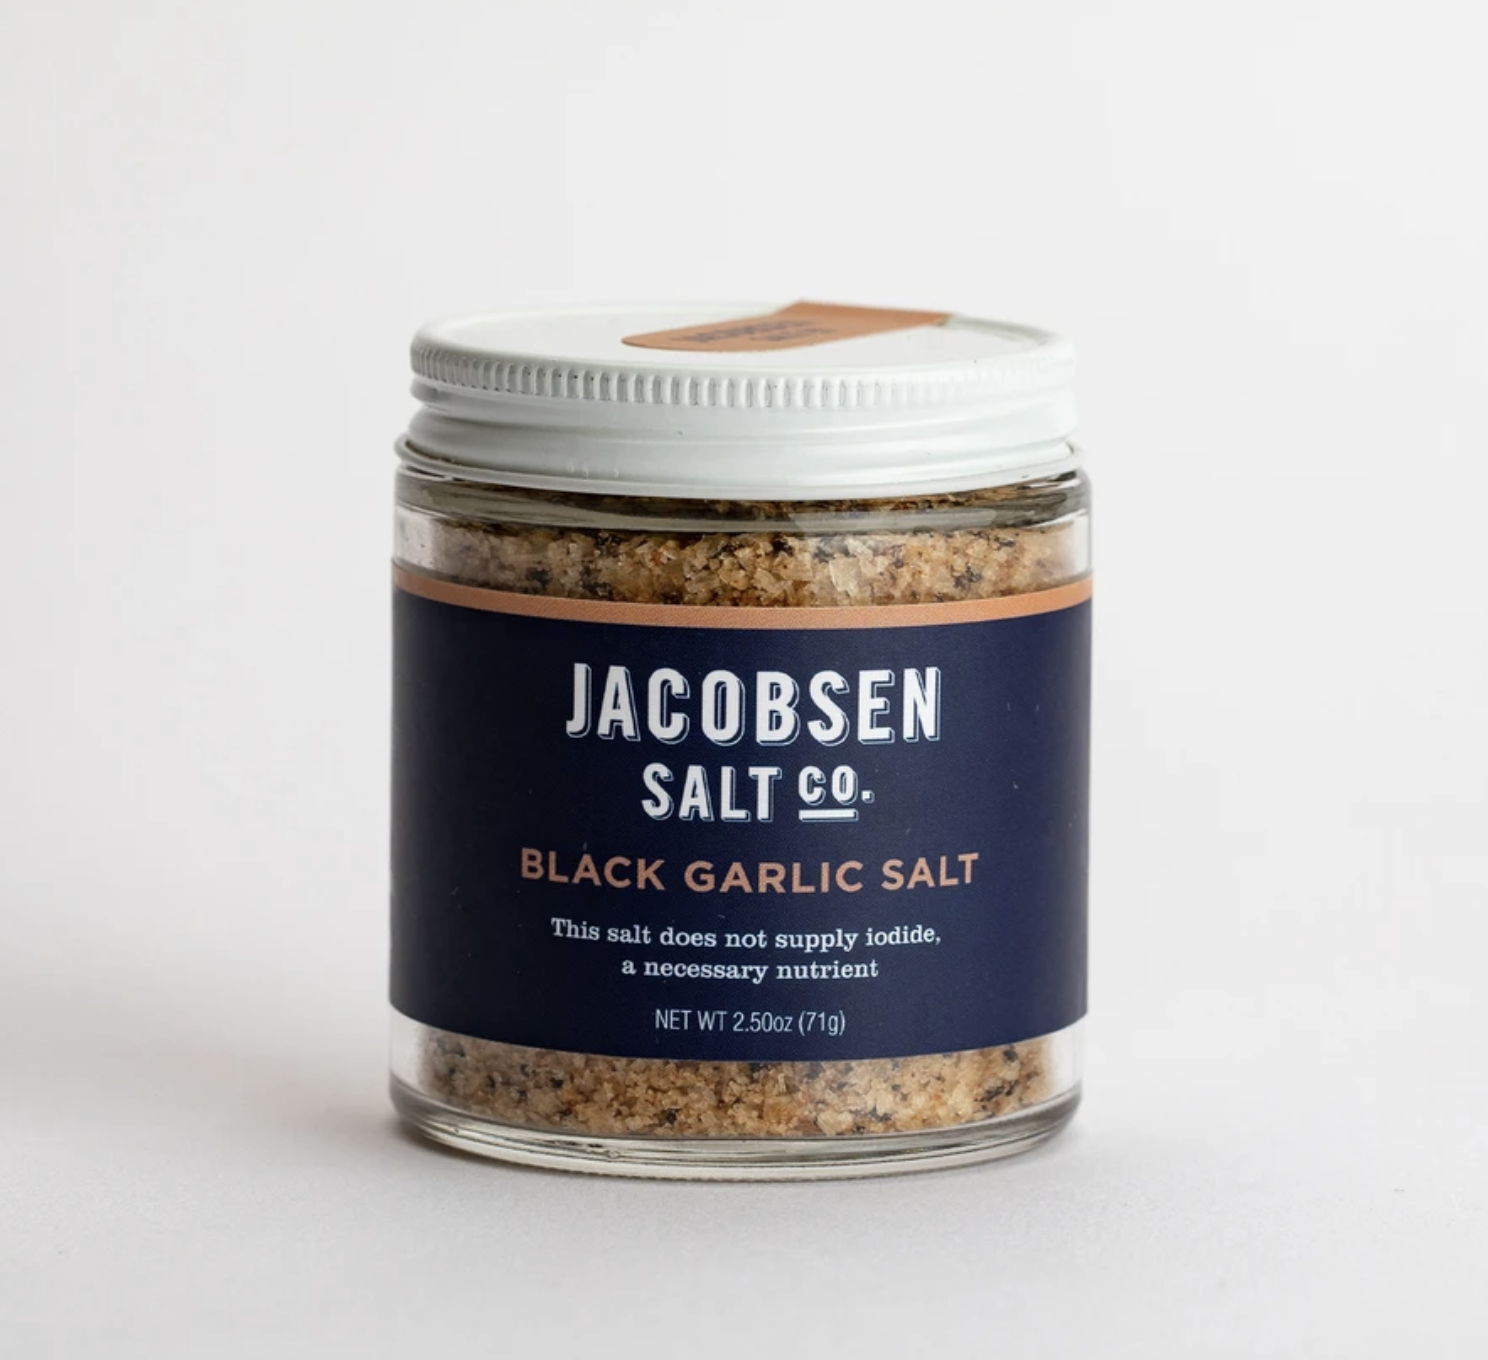 Jacobsen Salt Co. Black Garlic Salt